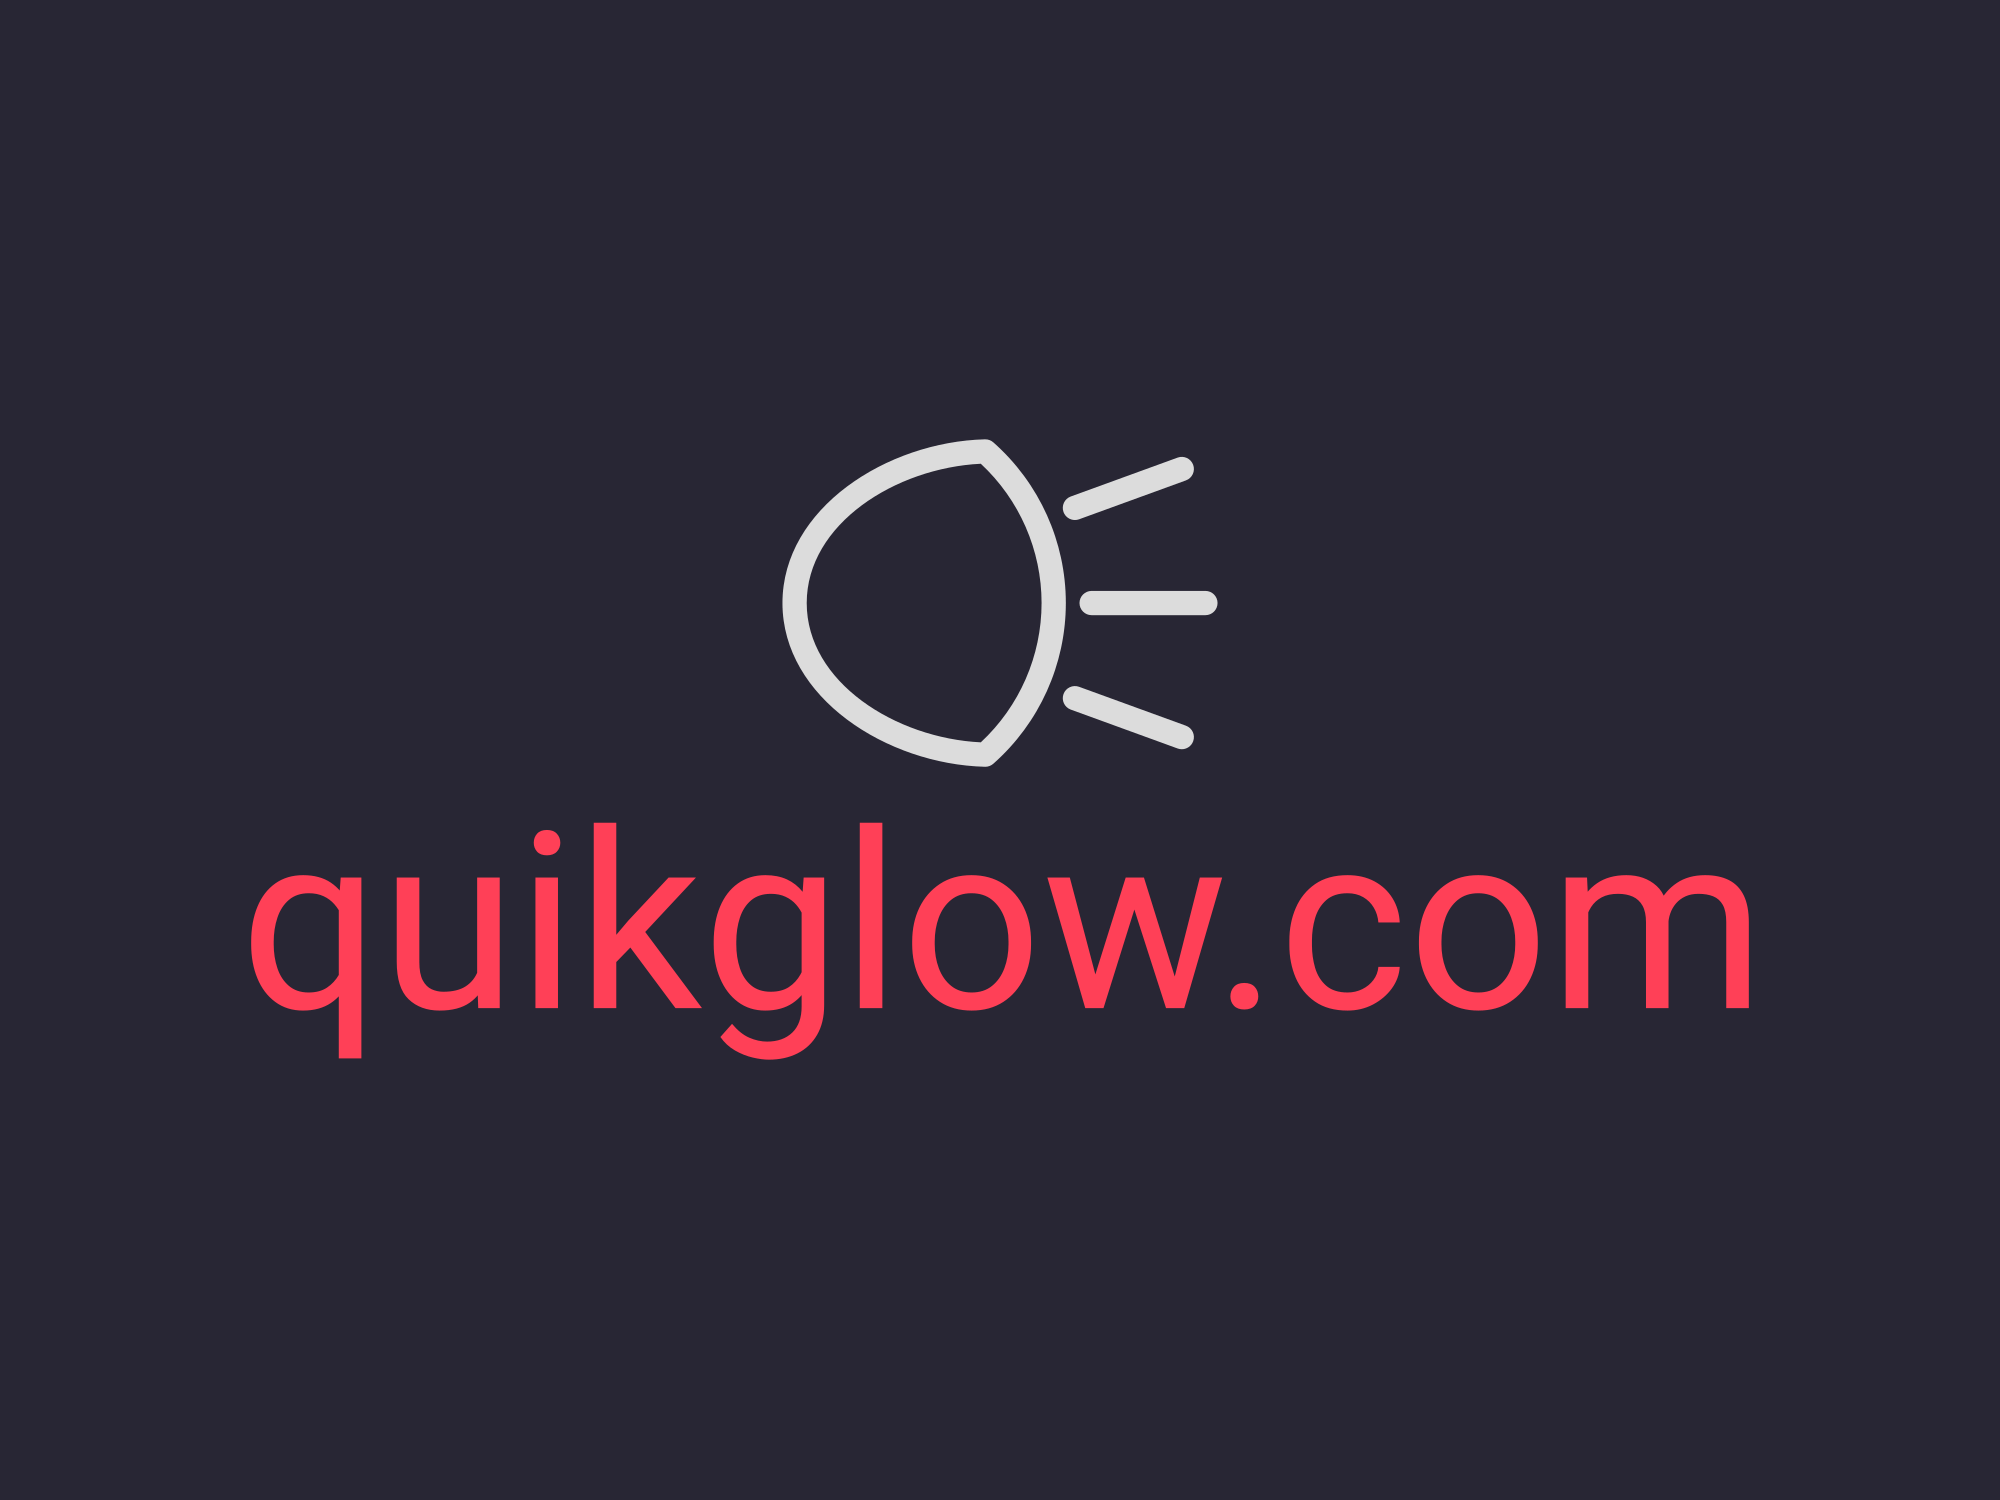 quikglowcom-high-resolution-logo.png